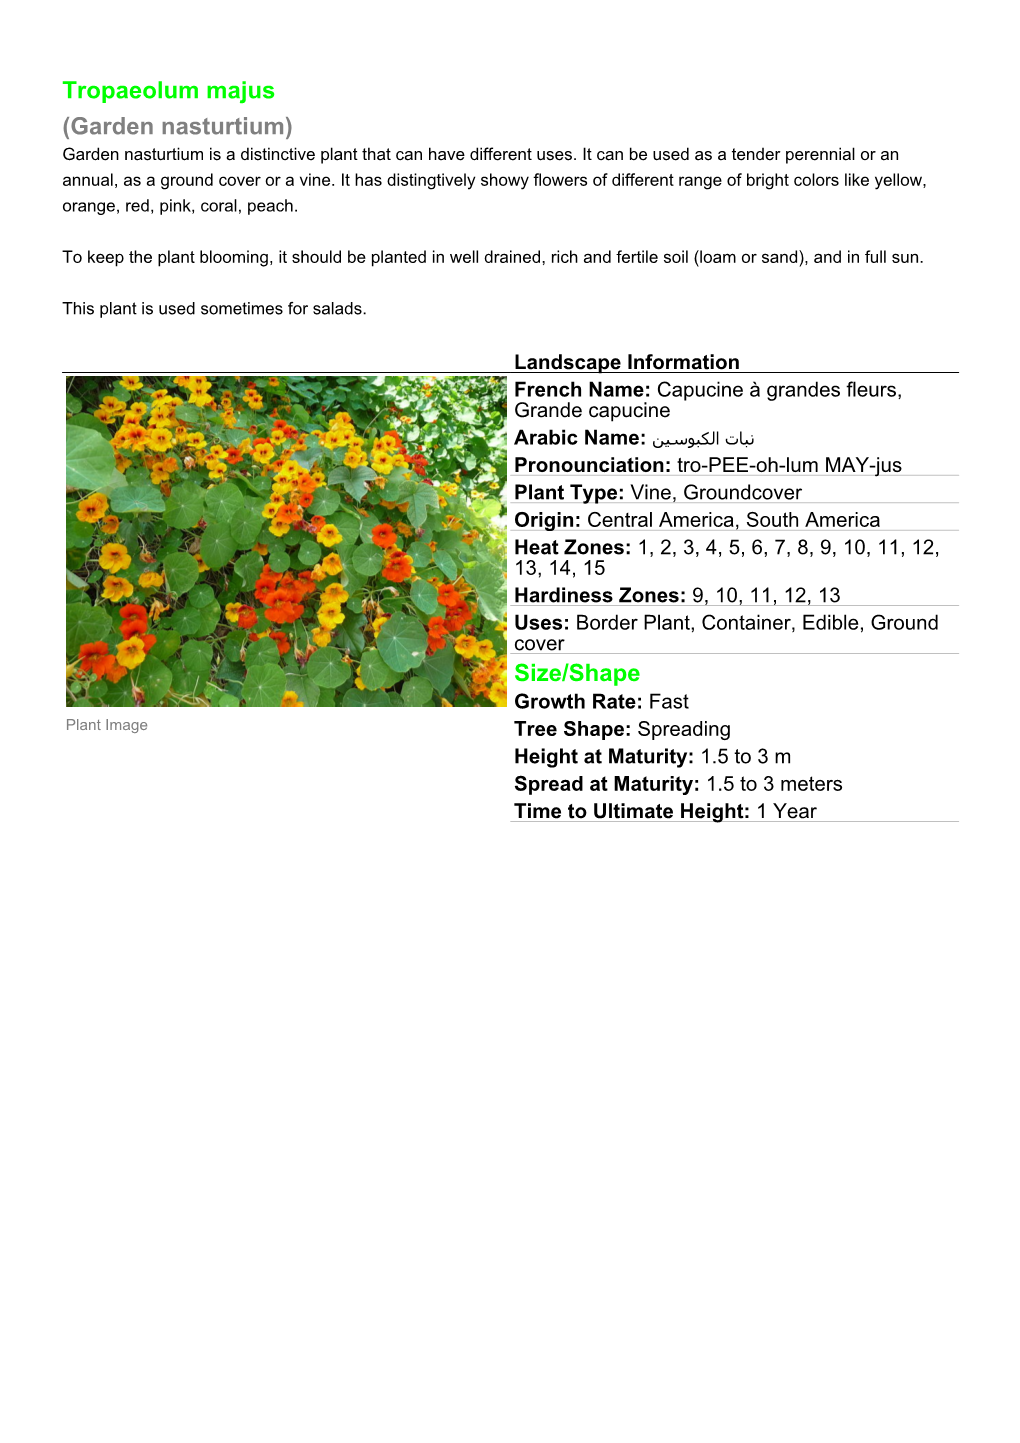 Tropaeolum Majus (Garden Nasturtium) Garden Nasturtium Is a Distinctive Plant That Can Have Different Uses